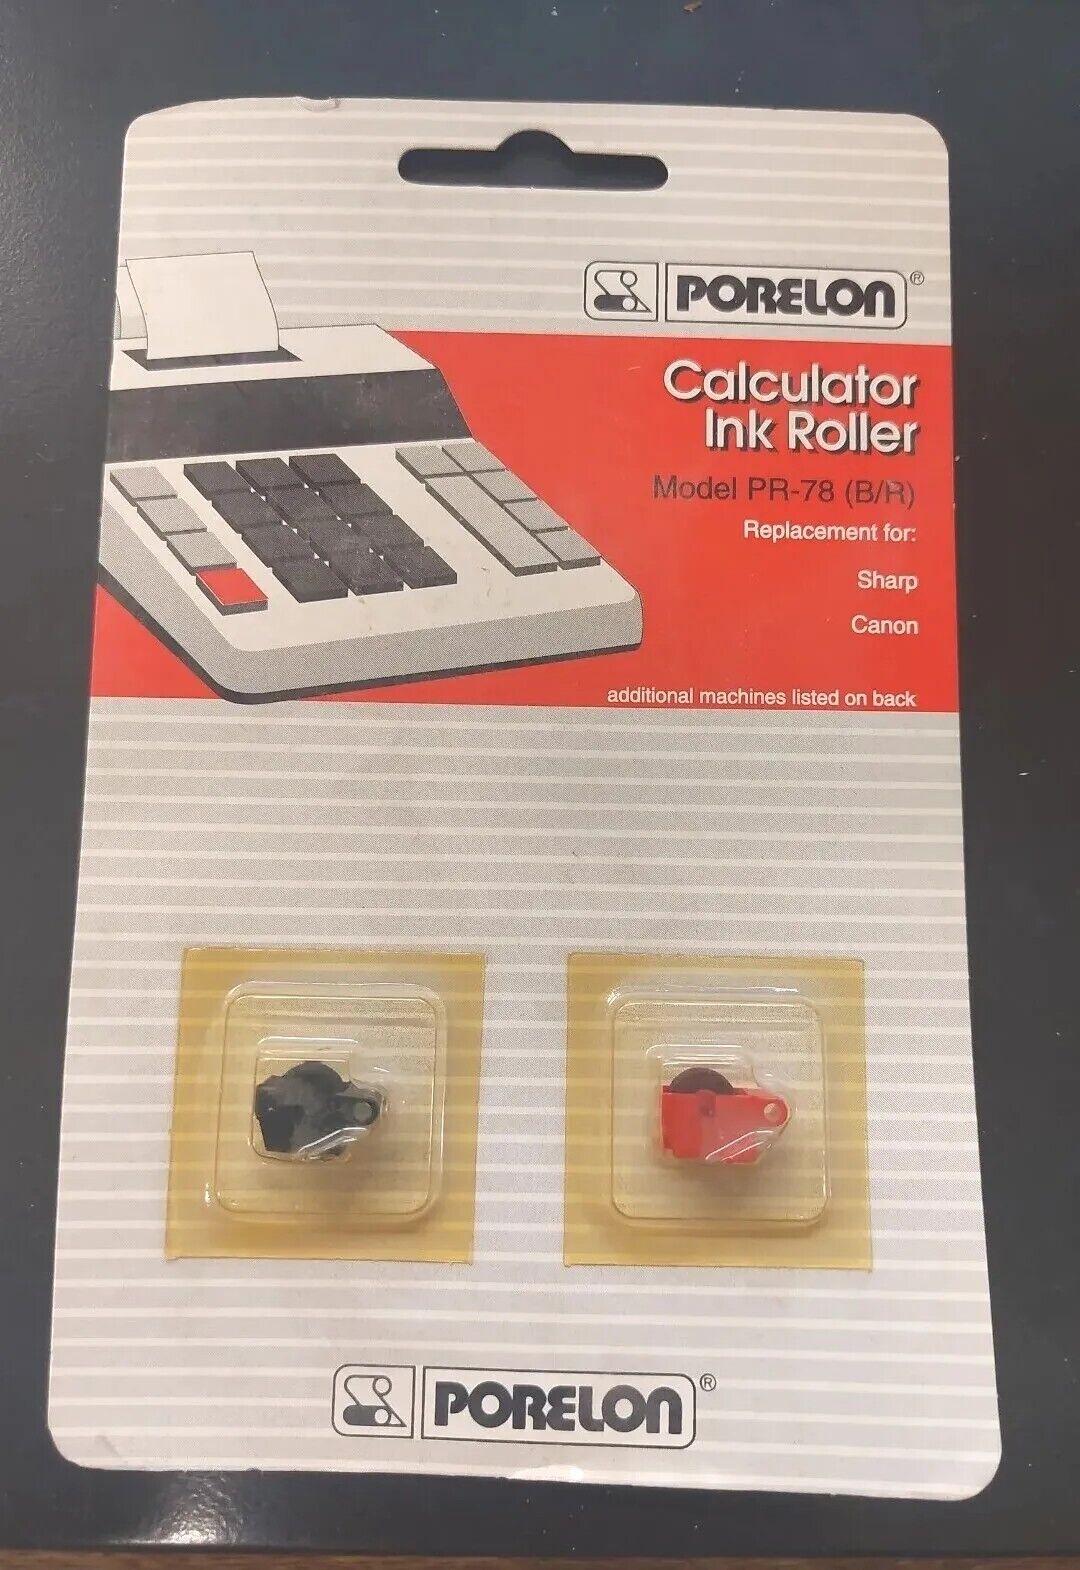 1995 Porelon Calculator Ink Roller Model PR-78 (B/R) ~ Replaces Sharp & Canon